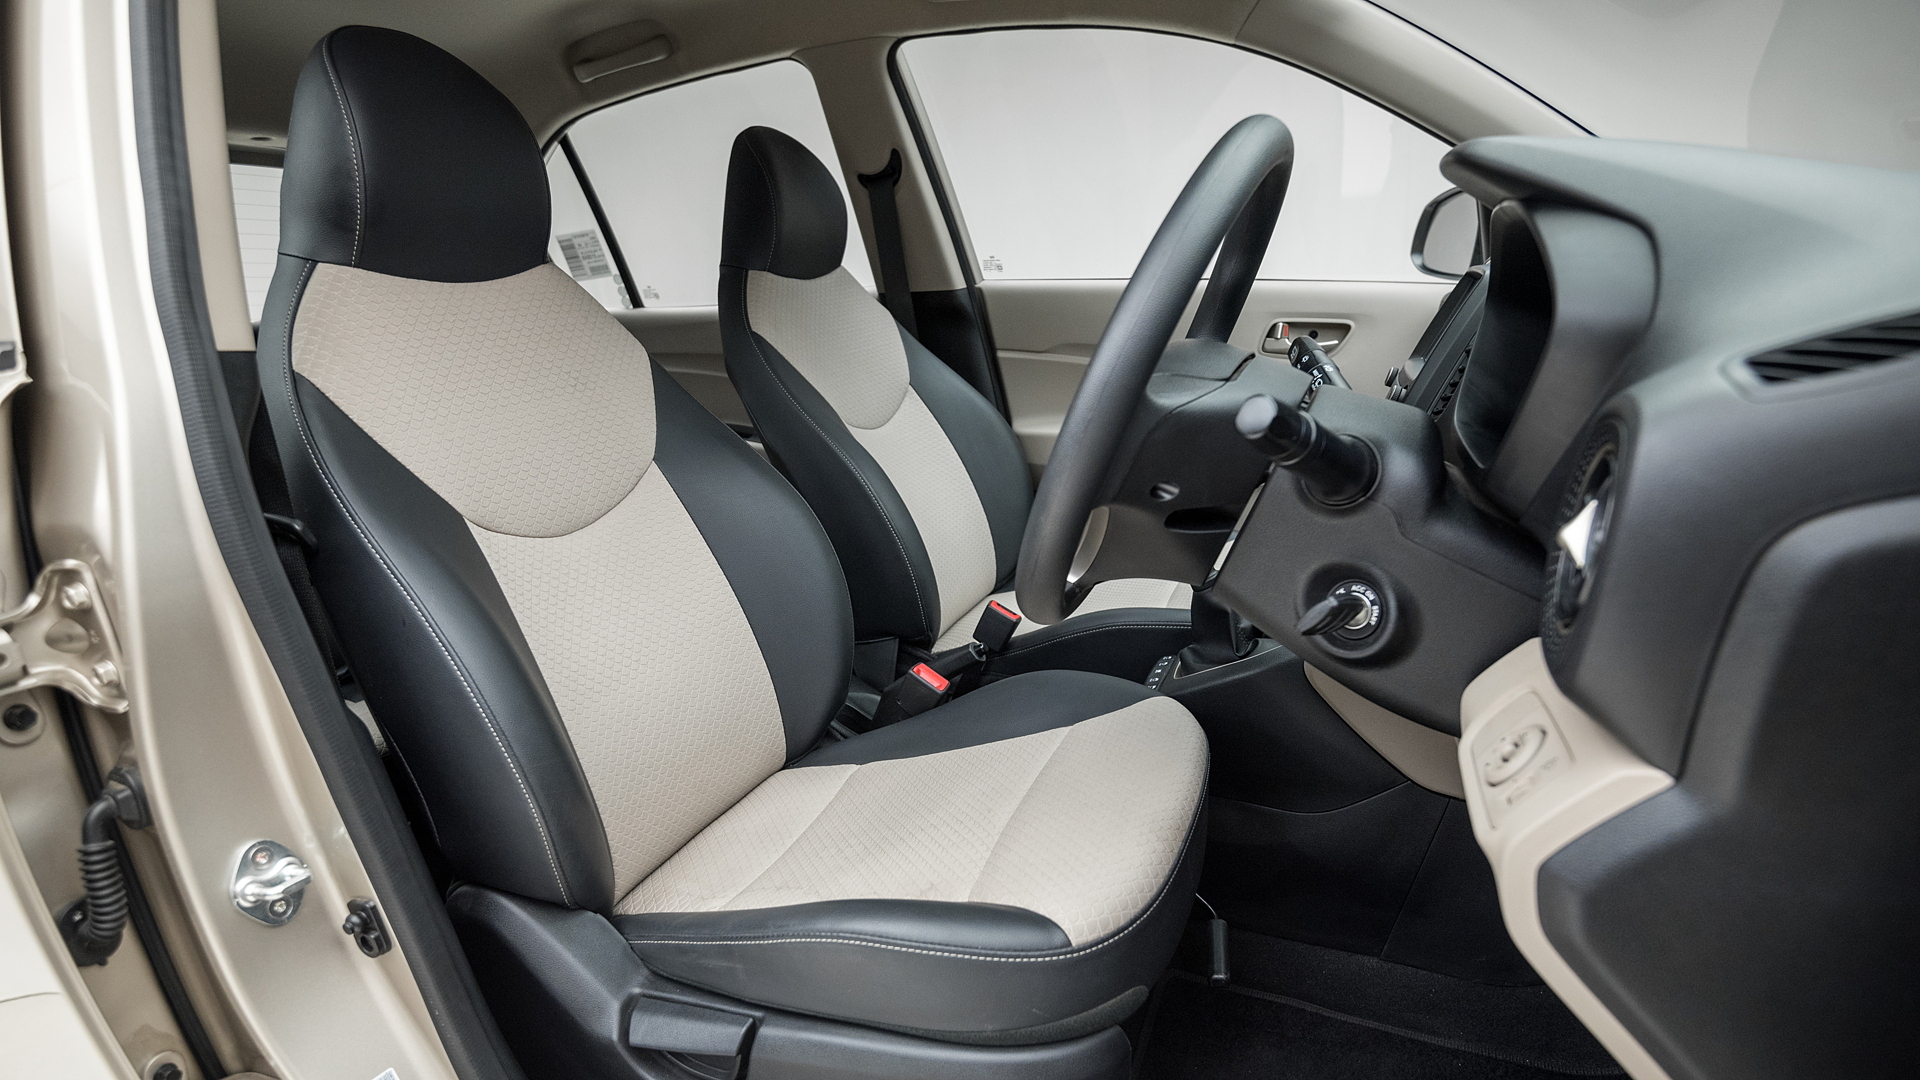 Hyundai Santro Photo Interior Image Carwale